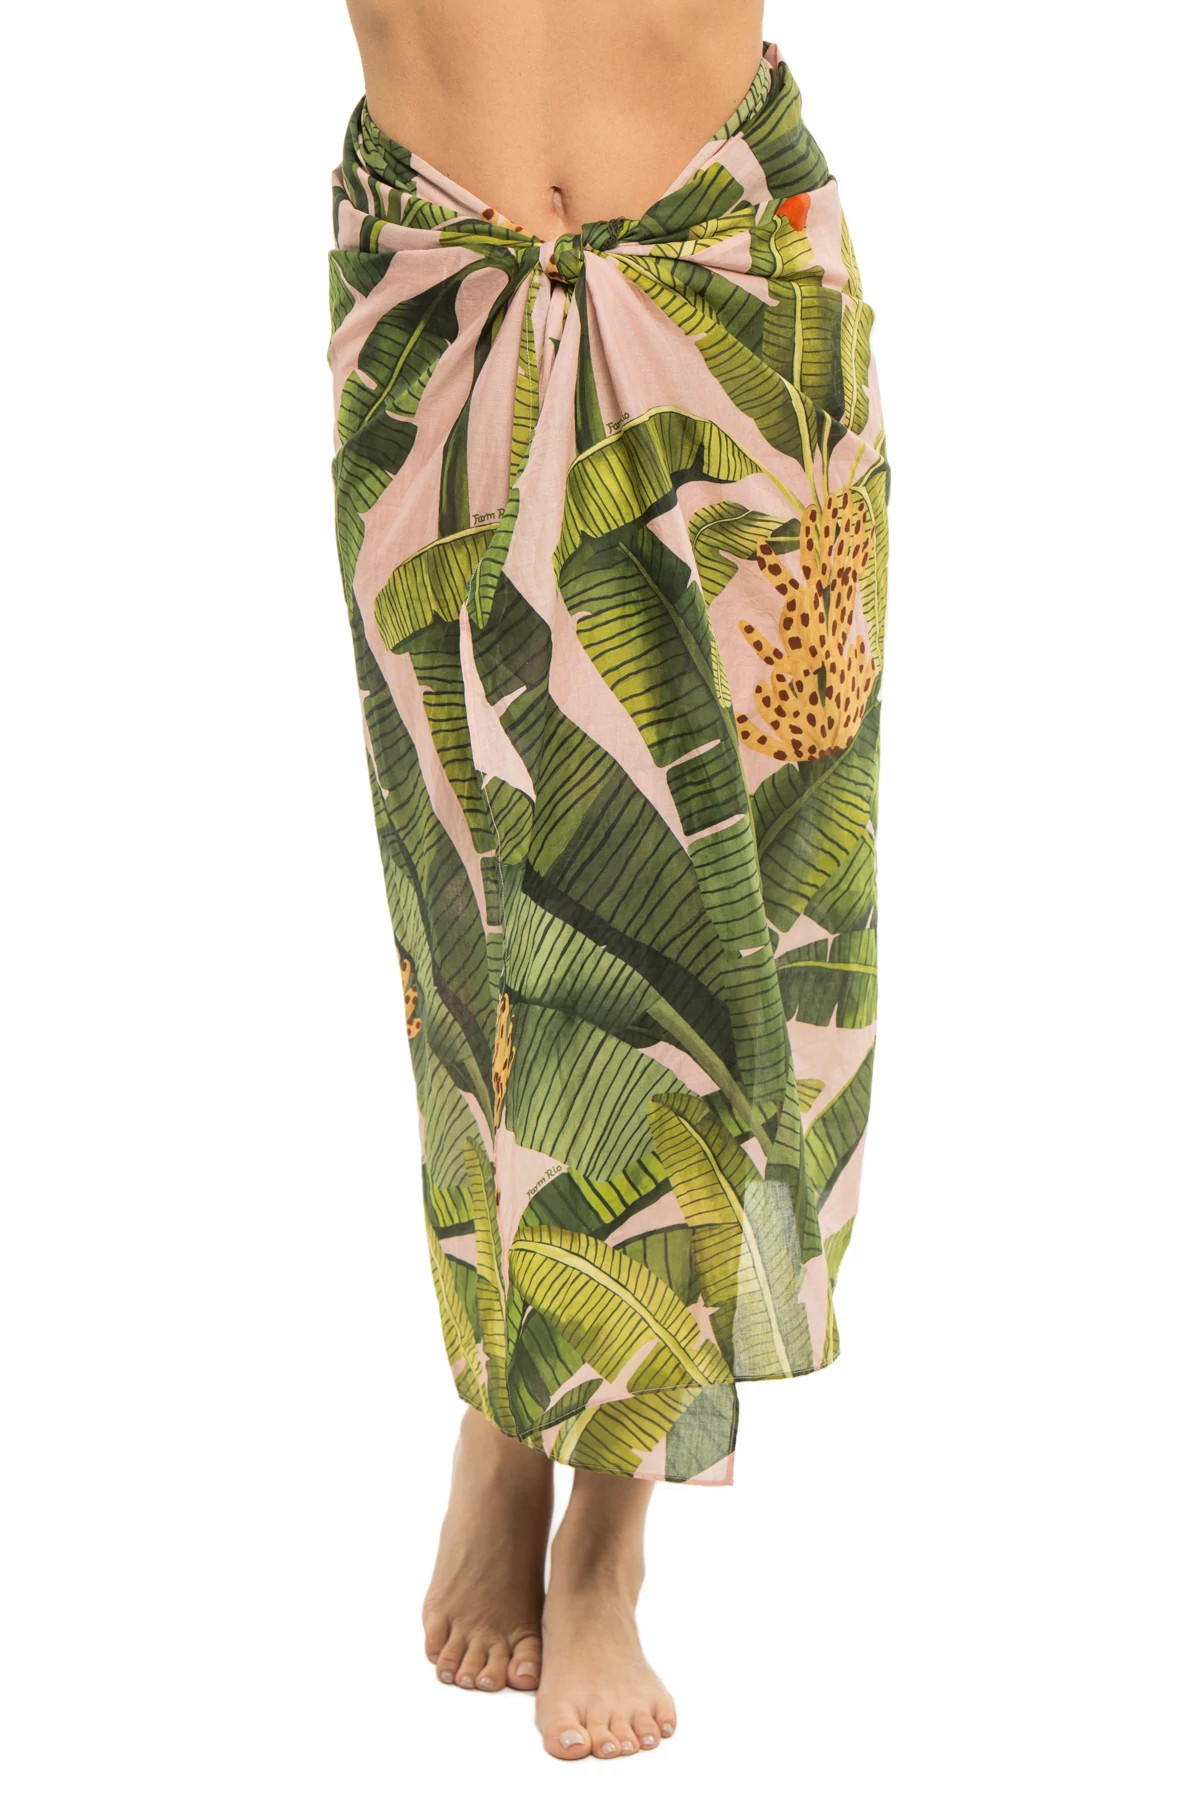 BANANA LEAVES PINK Banana Leaves Midi Skirt image number 1